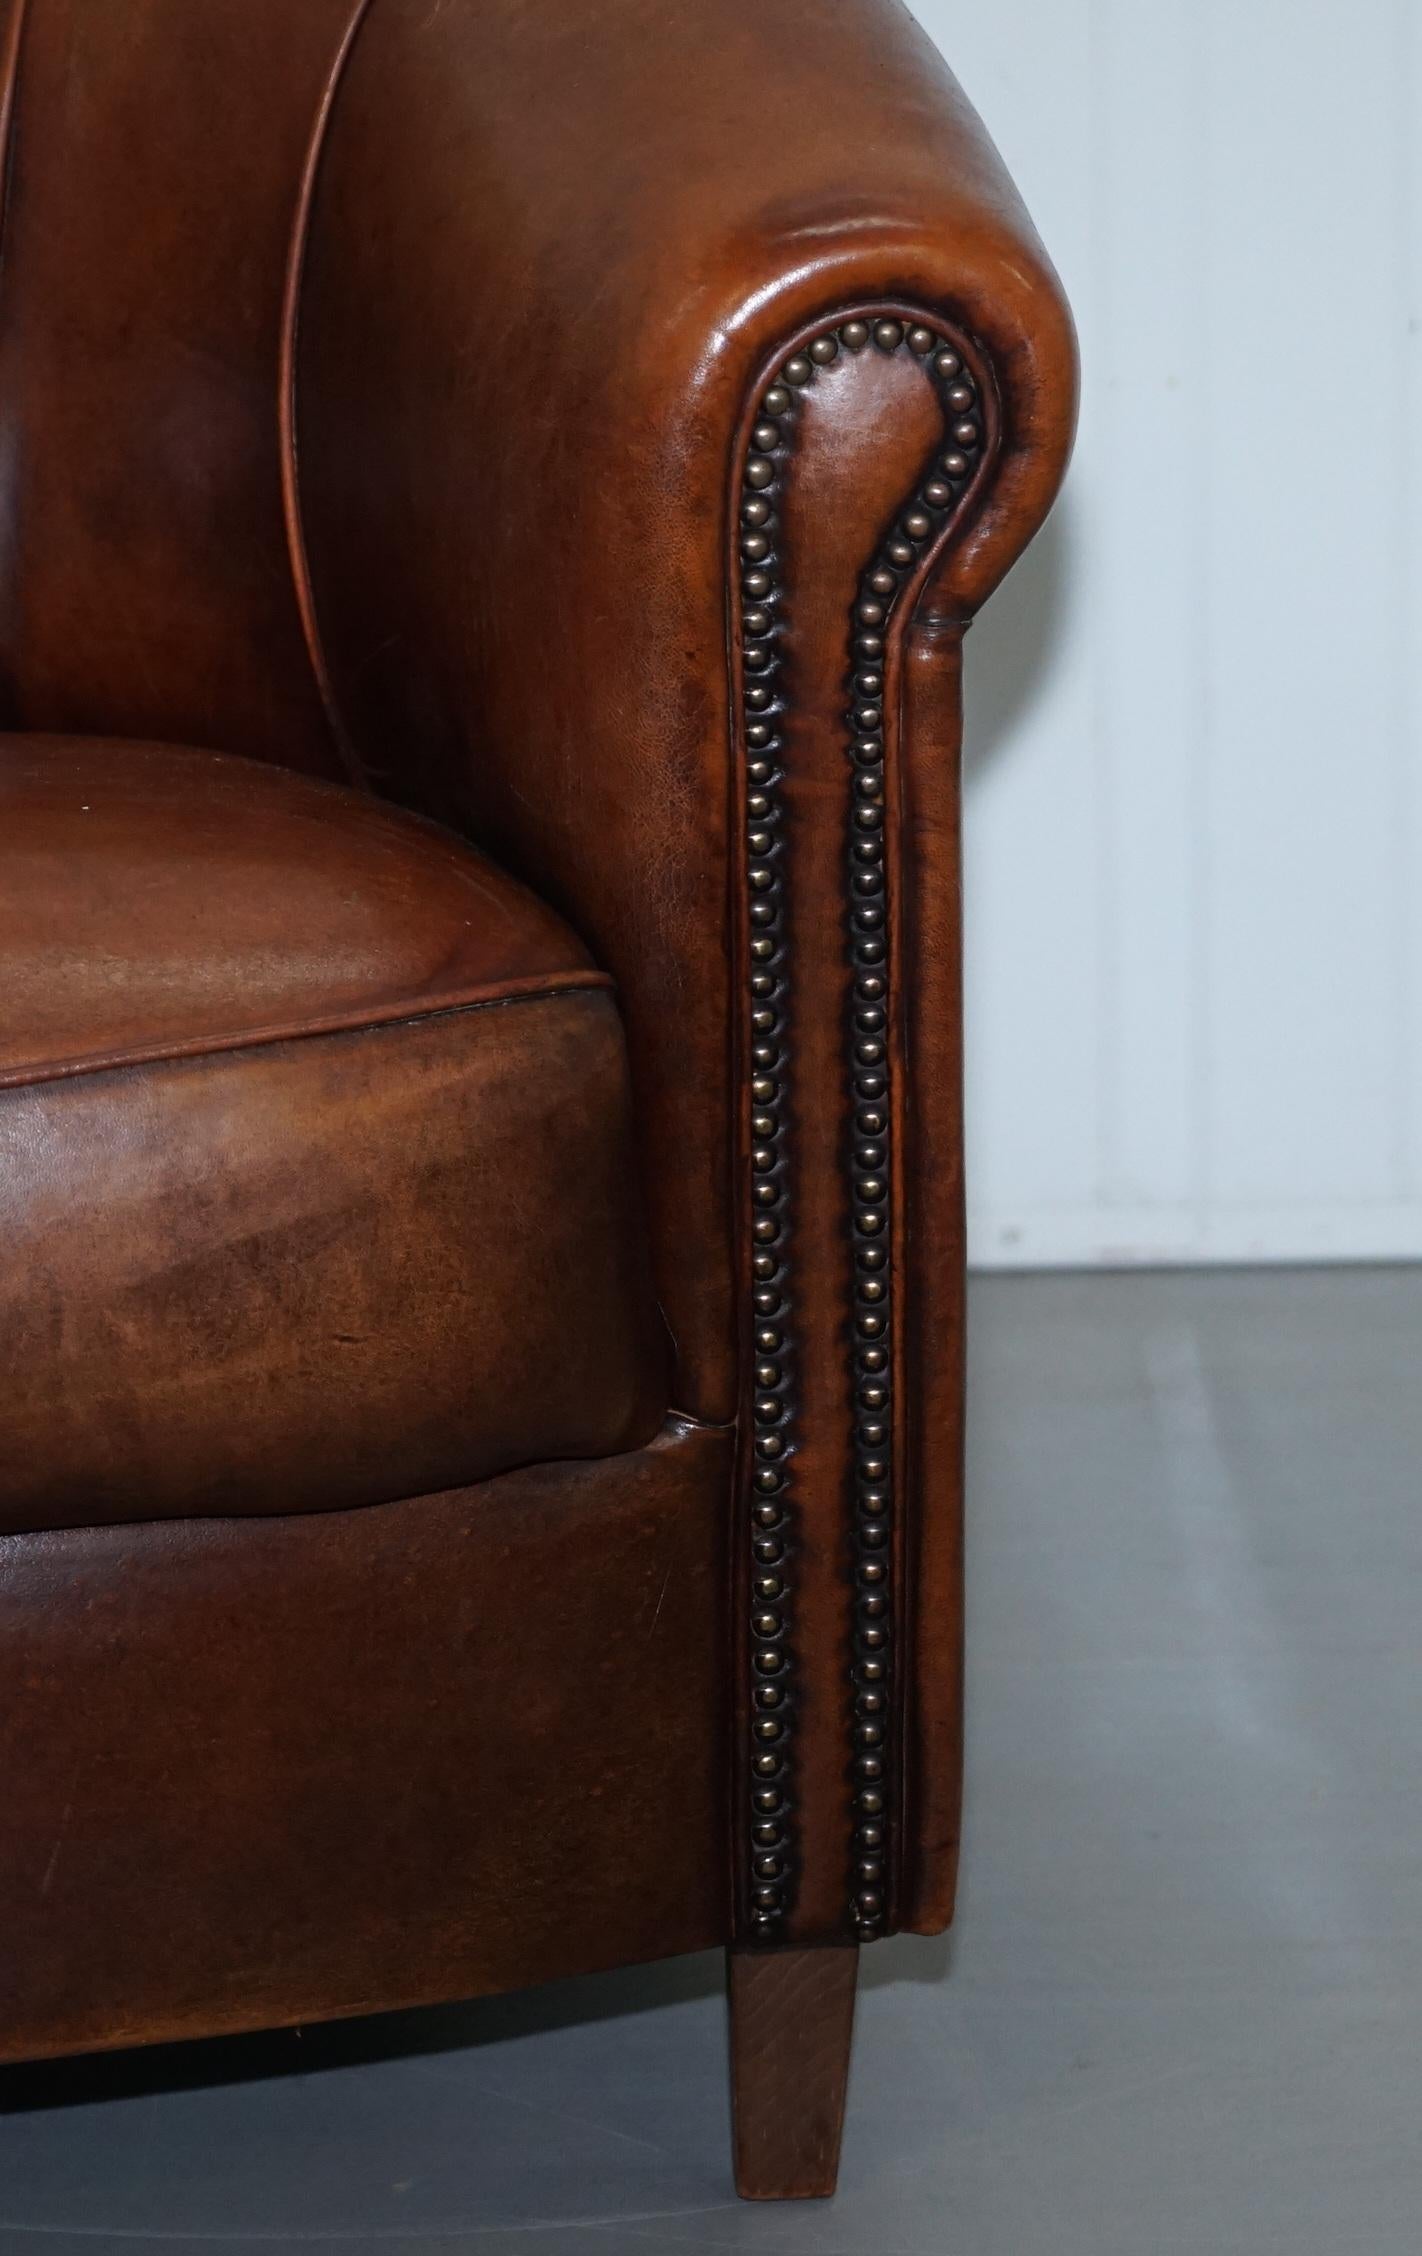 Sheepskin Leather Aged Brown Joris Product Design Tub Club Armchair Rare Find 4